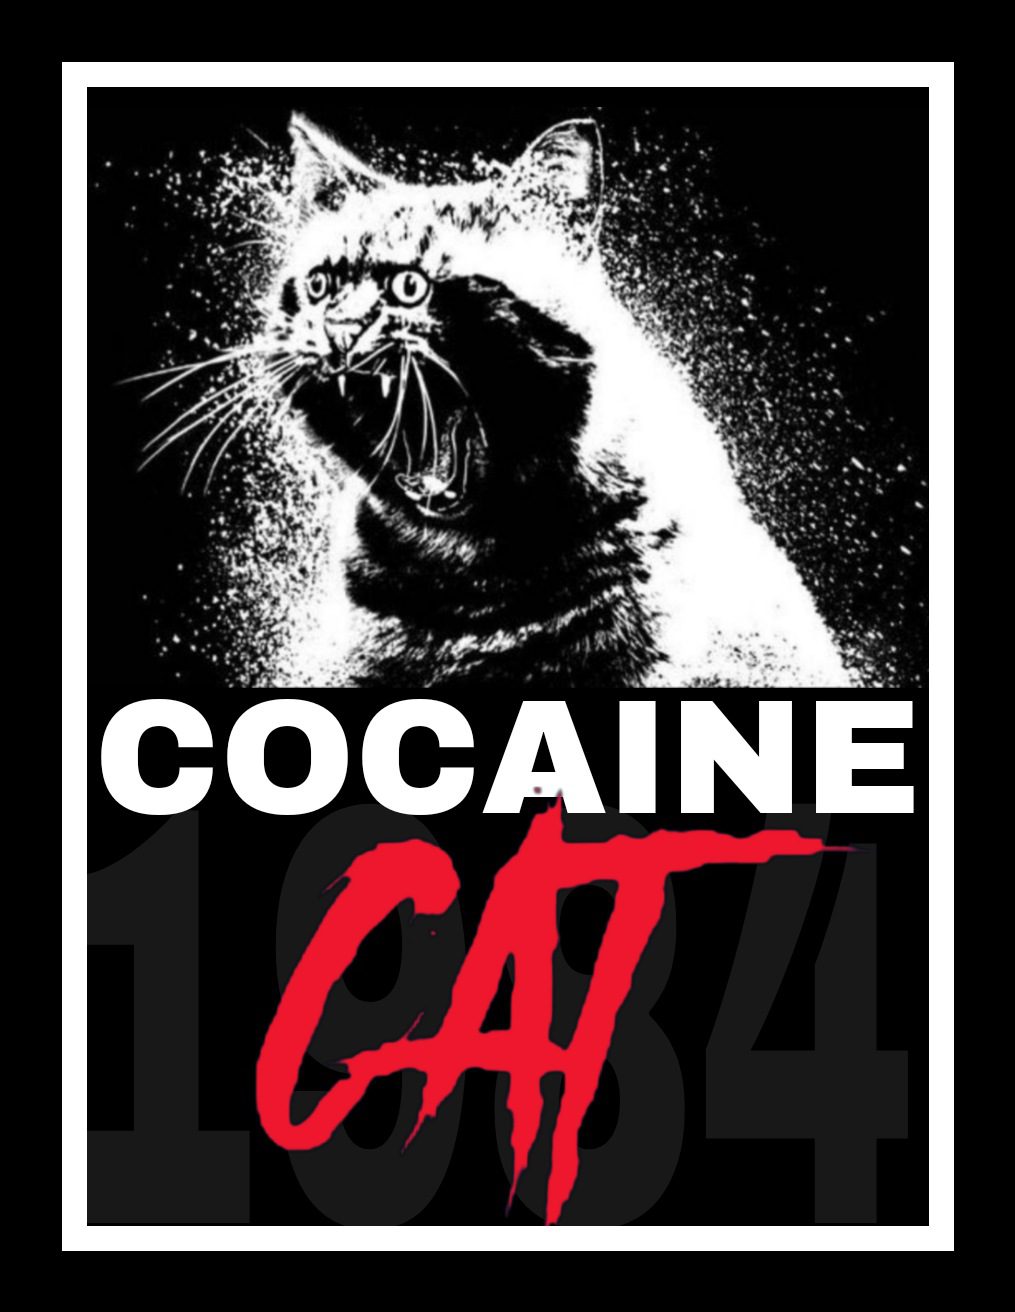 Cocaine Cat (Photo: Twitter)